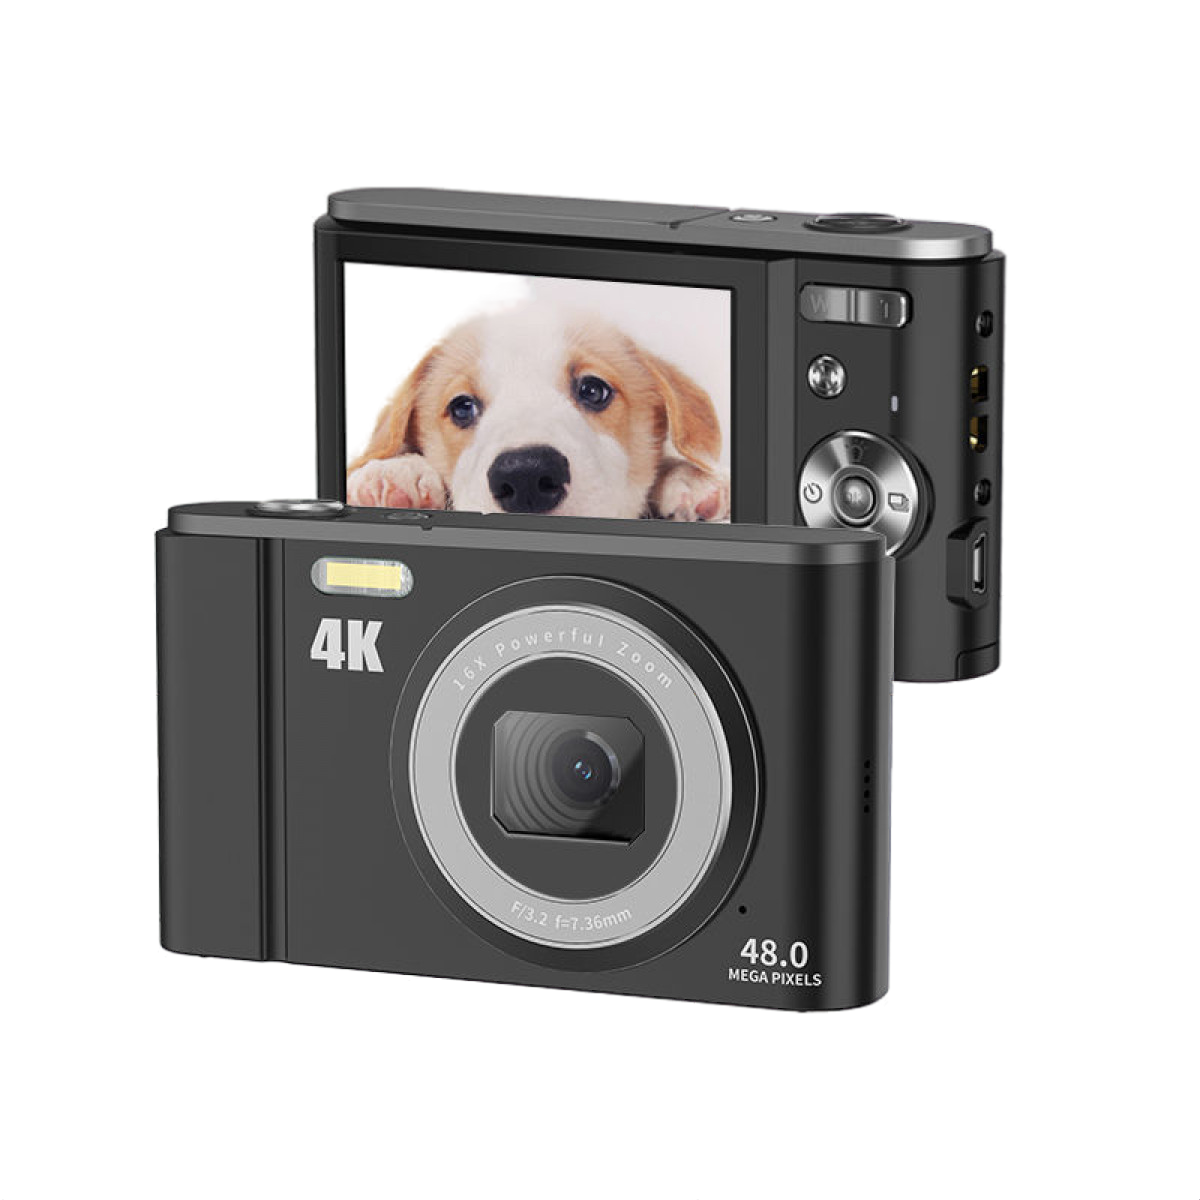 4K Zoom 16x schwarz- INF Video 48MP Digitalkamera Digitalkamera